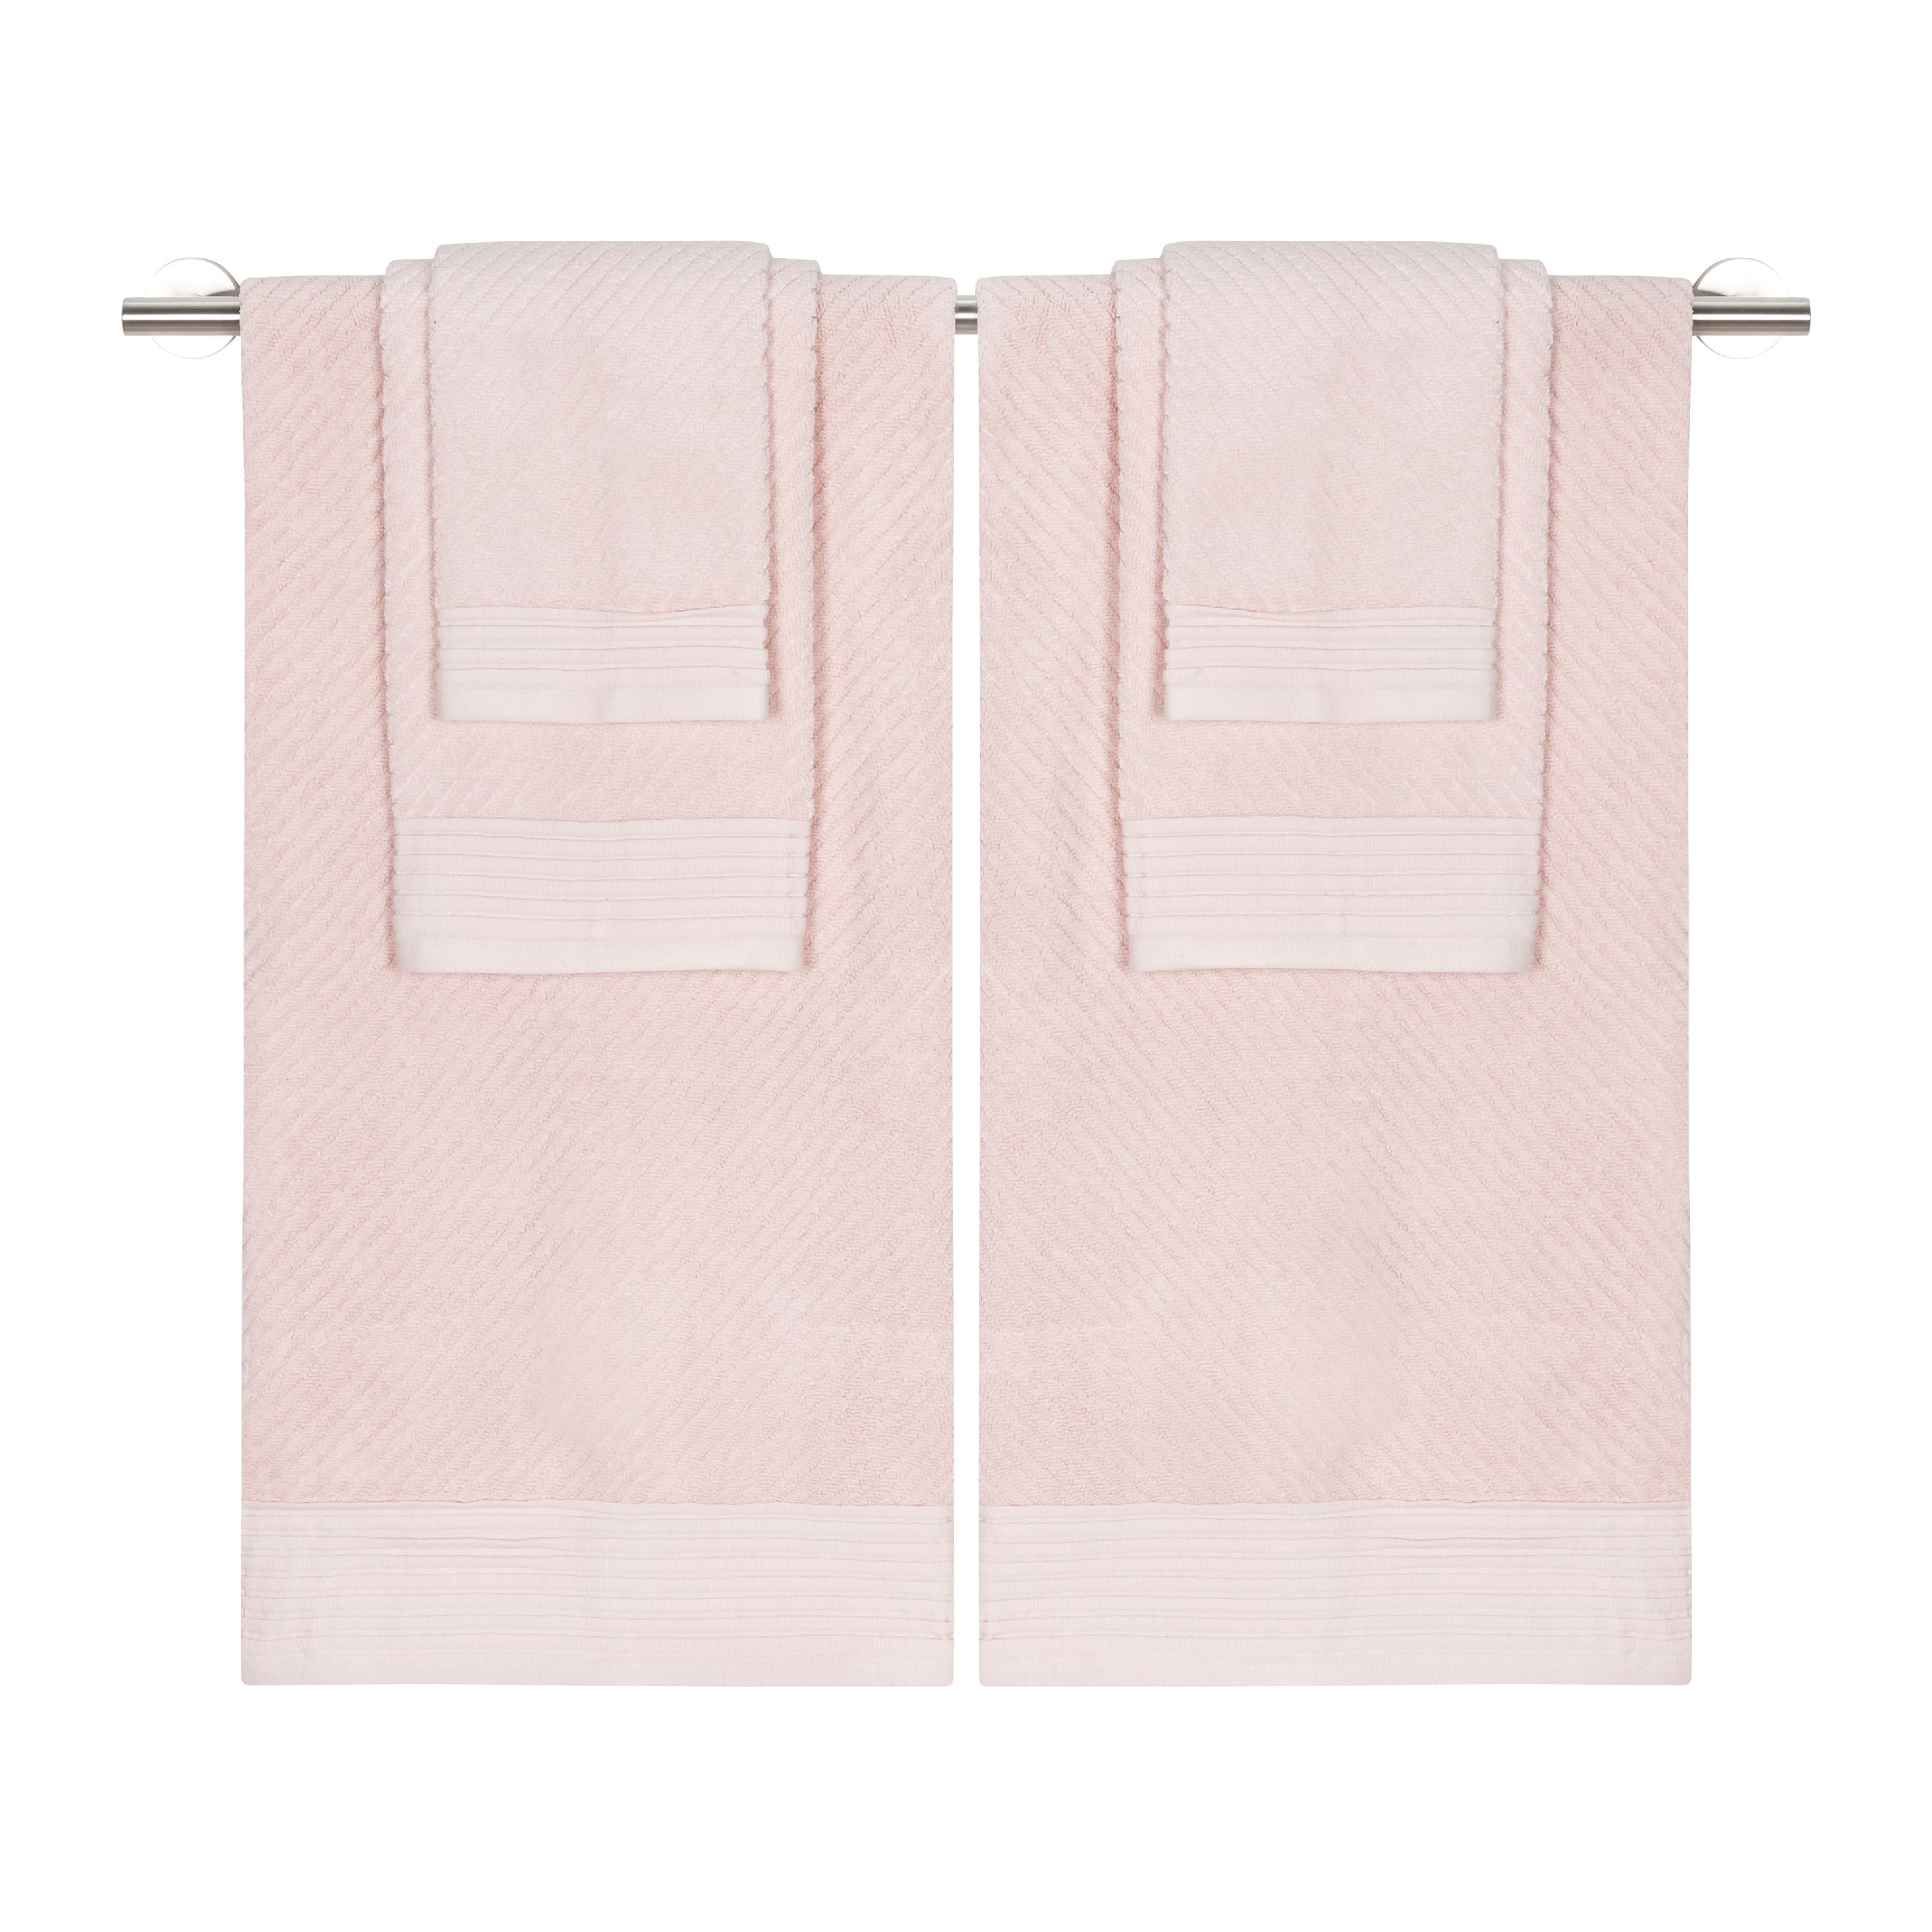 Caro Home Beacon Cotton 6-pc. Textured Towel Set Bedding In Persian  Periwinkle